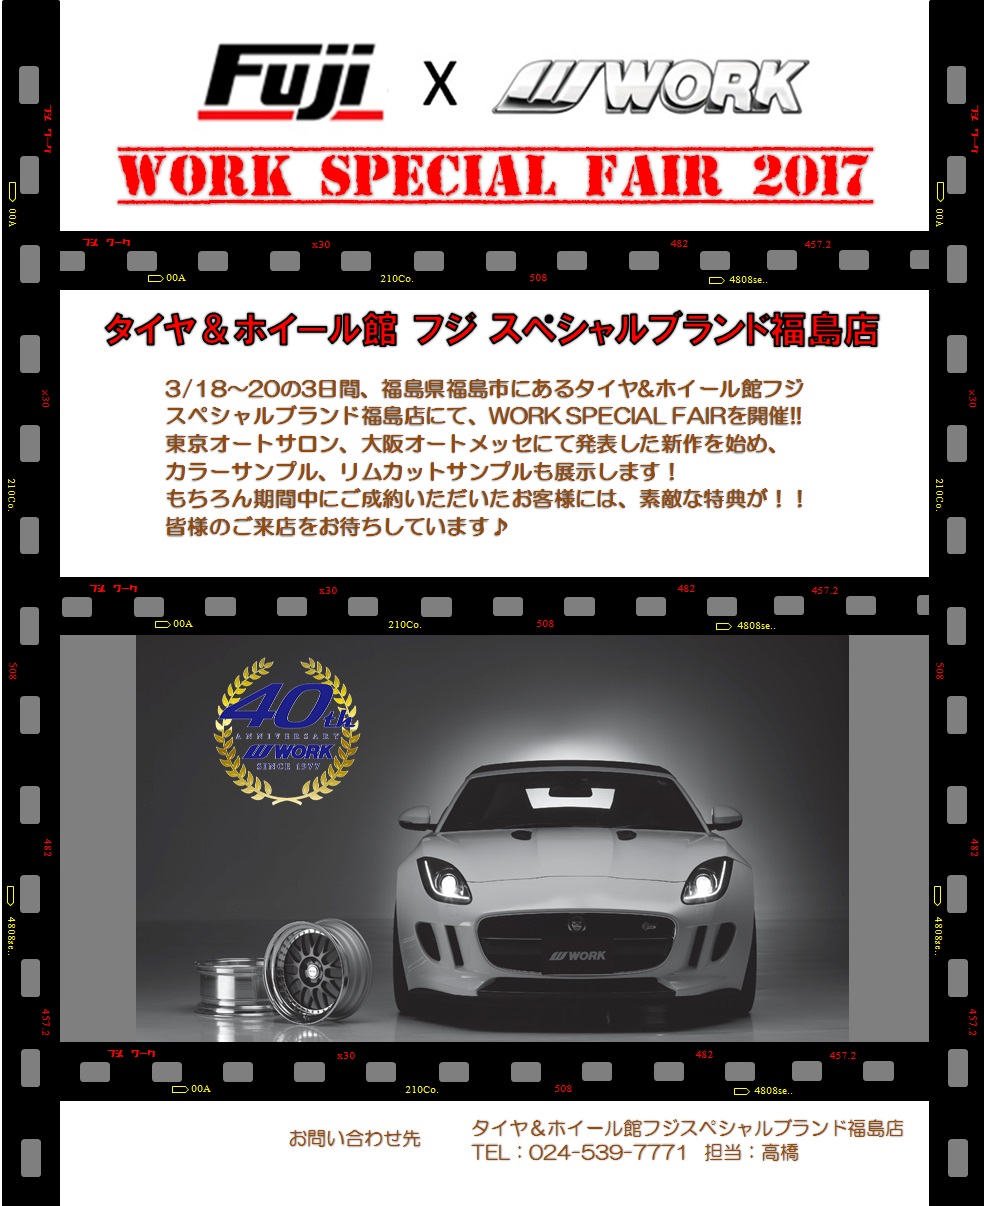 WORK SPECIAL FAIR 2017 in フジスペシャルブランド福島店